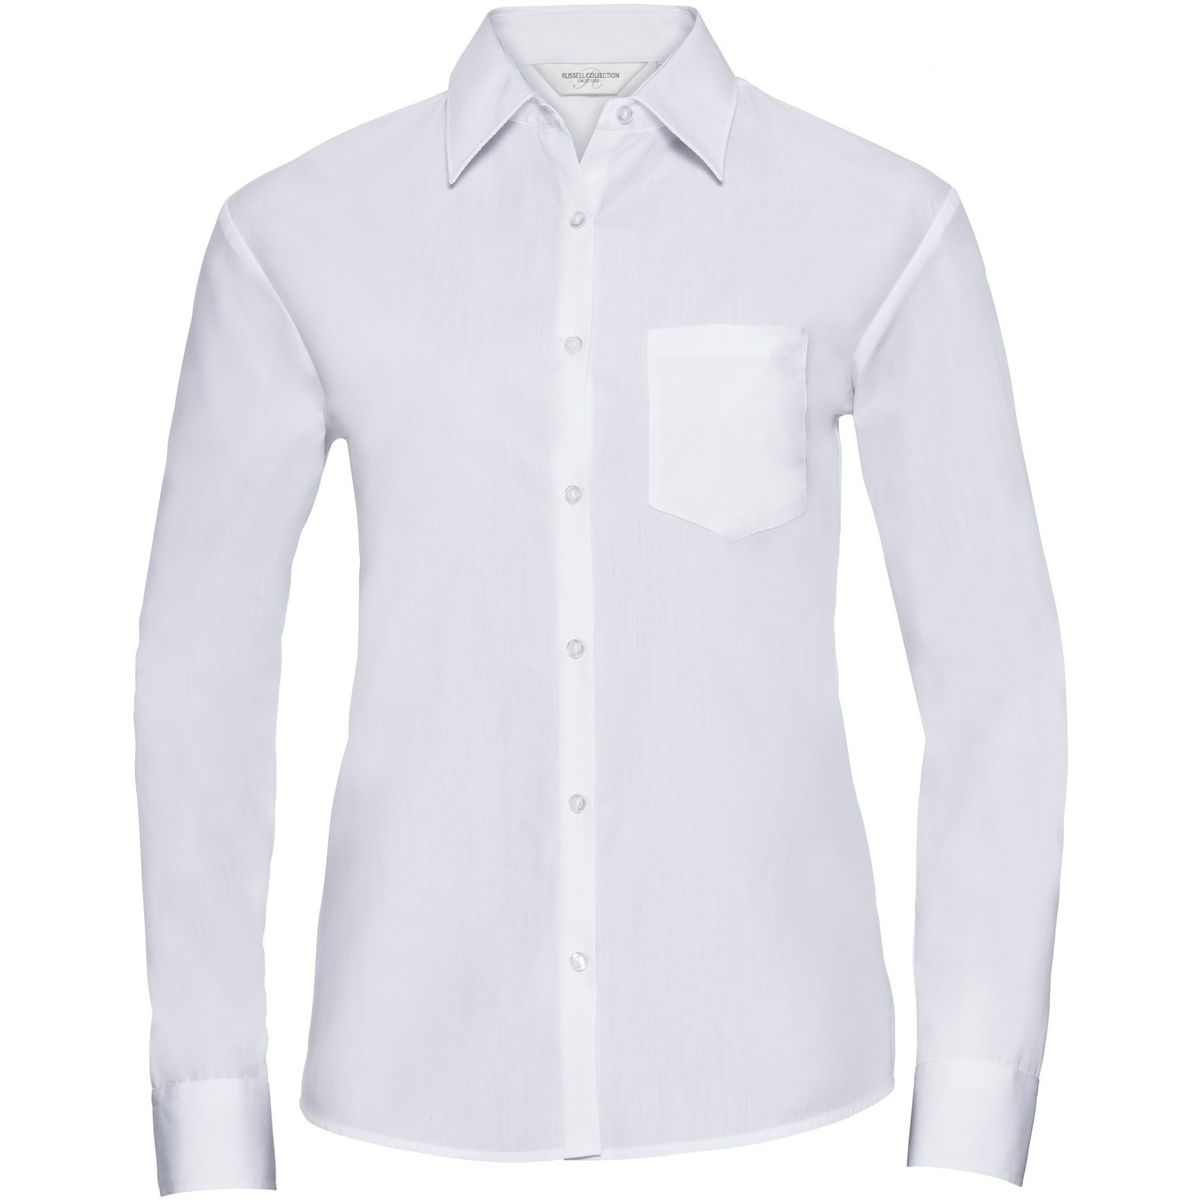 Vêtements Femme Chemises / Chemisiers Russell 934F Blanc